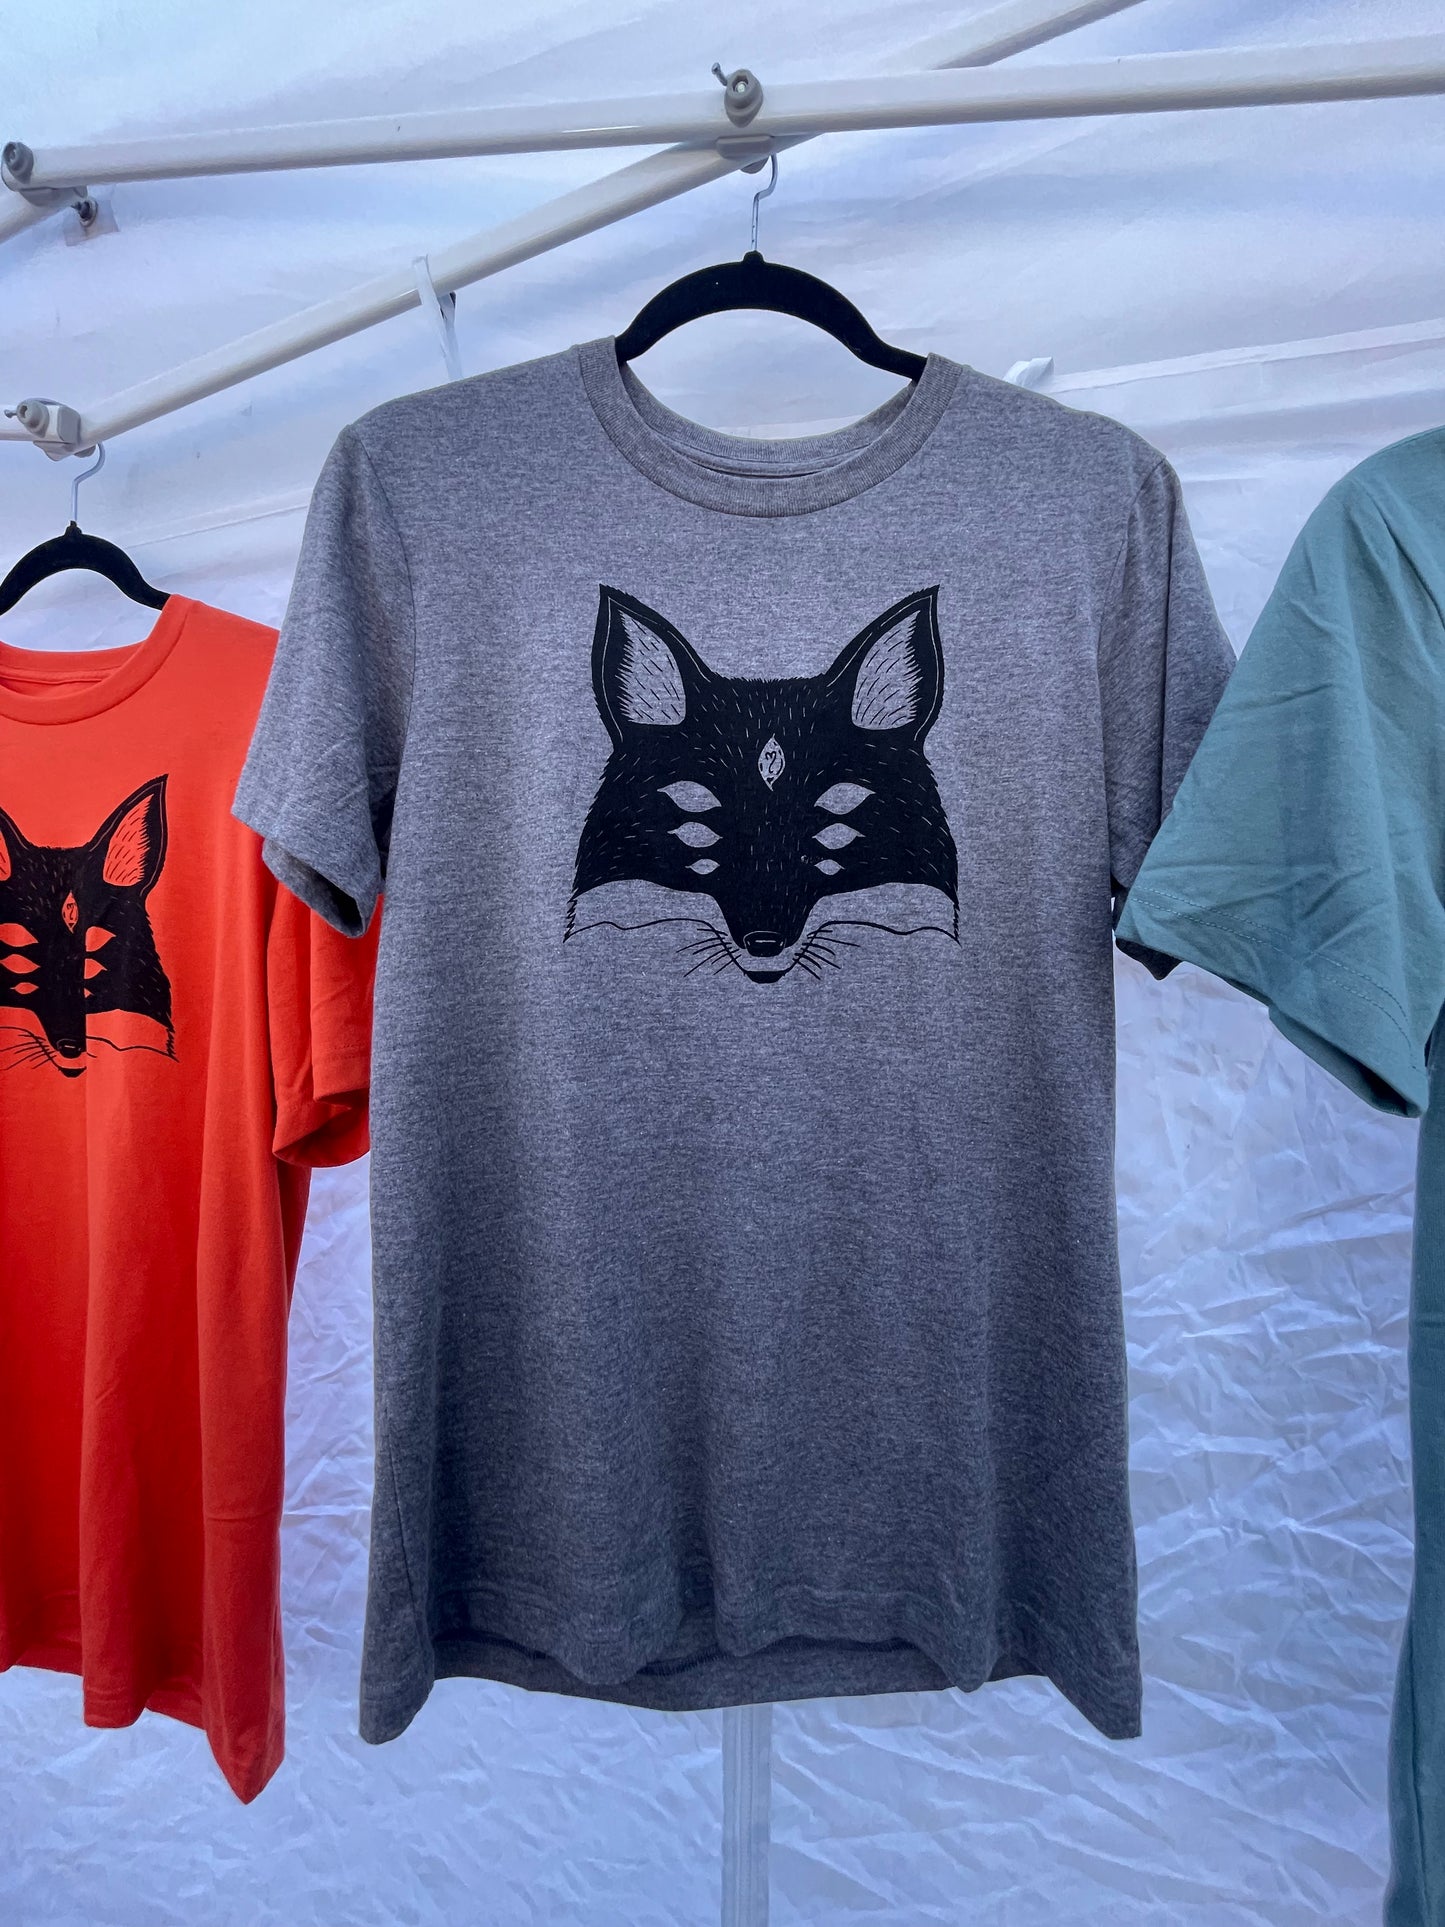 Fox logo screen printed shirts